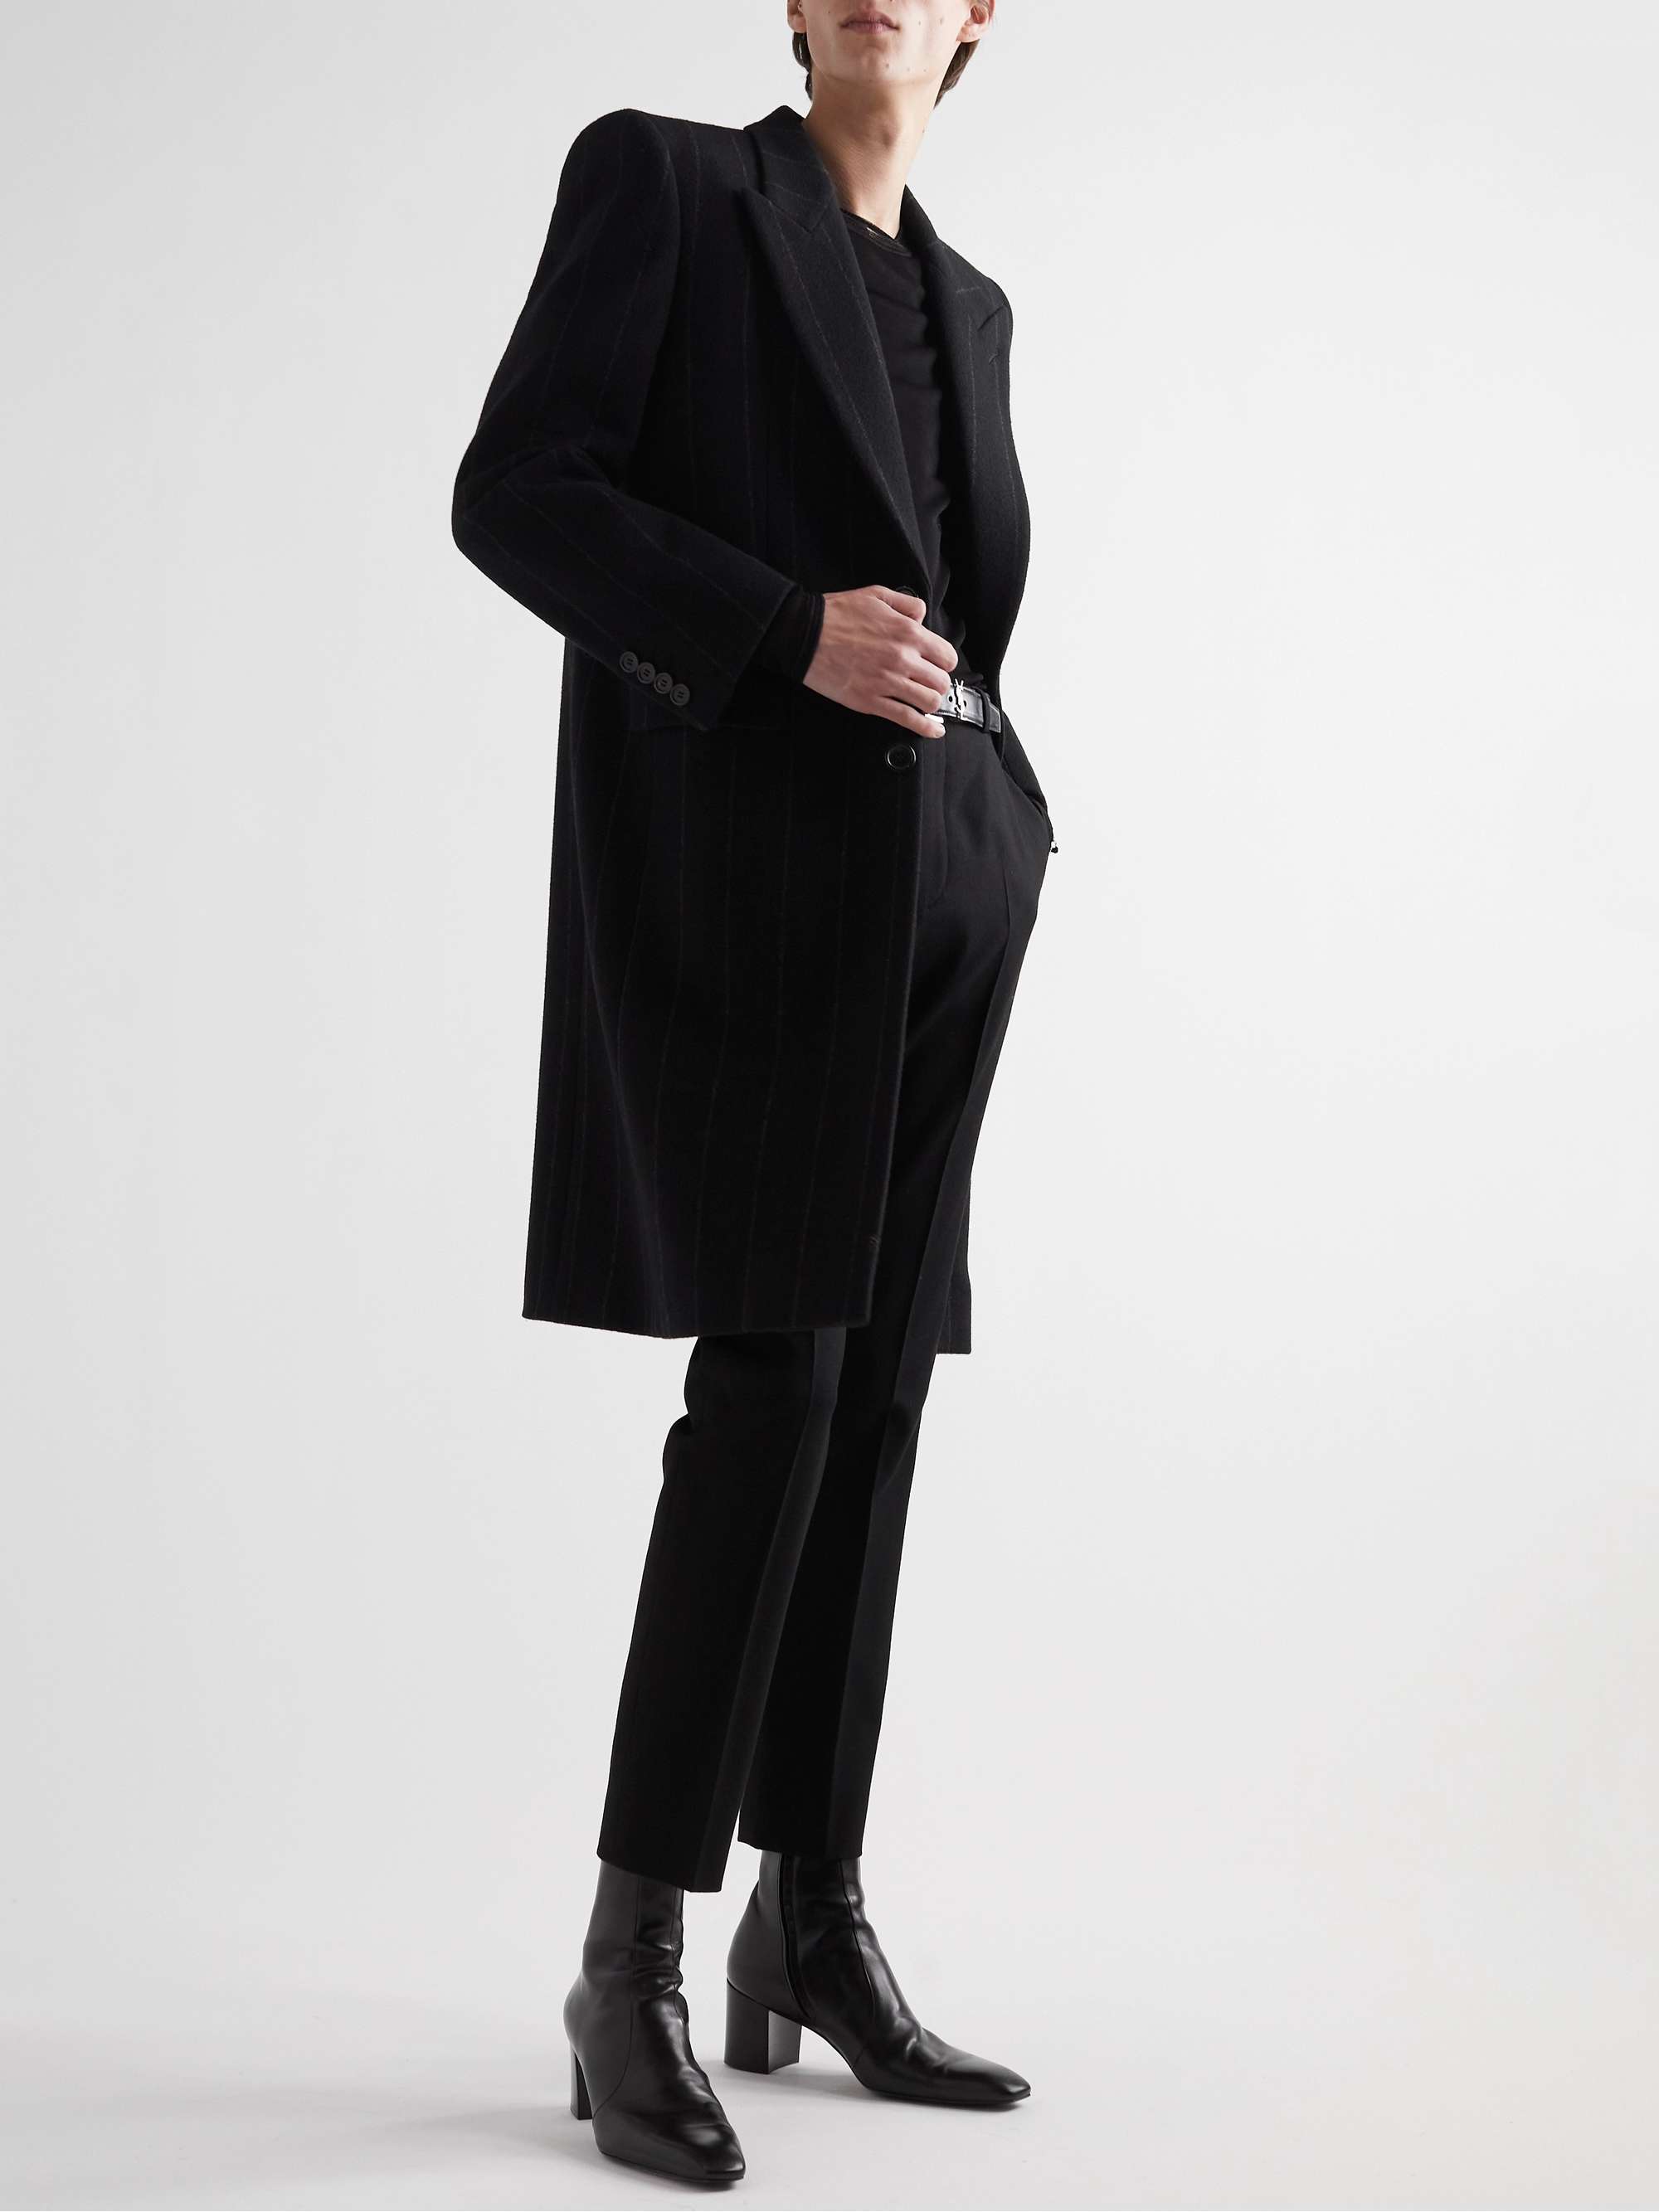 SAINT LAURENT Pinstriped Wool-Blend Coat for Men | MR PORTER